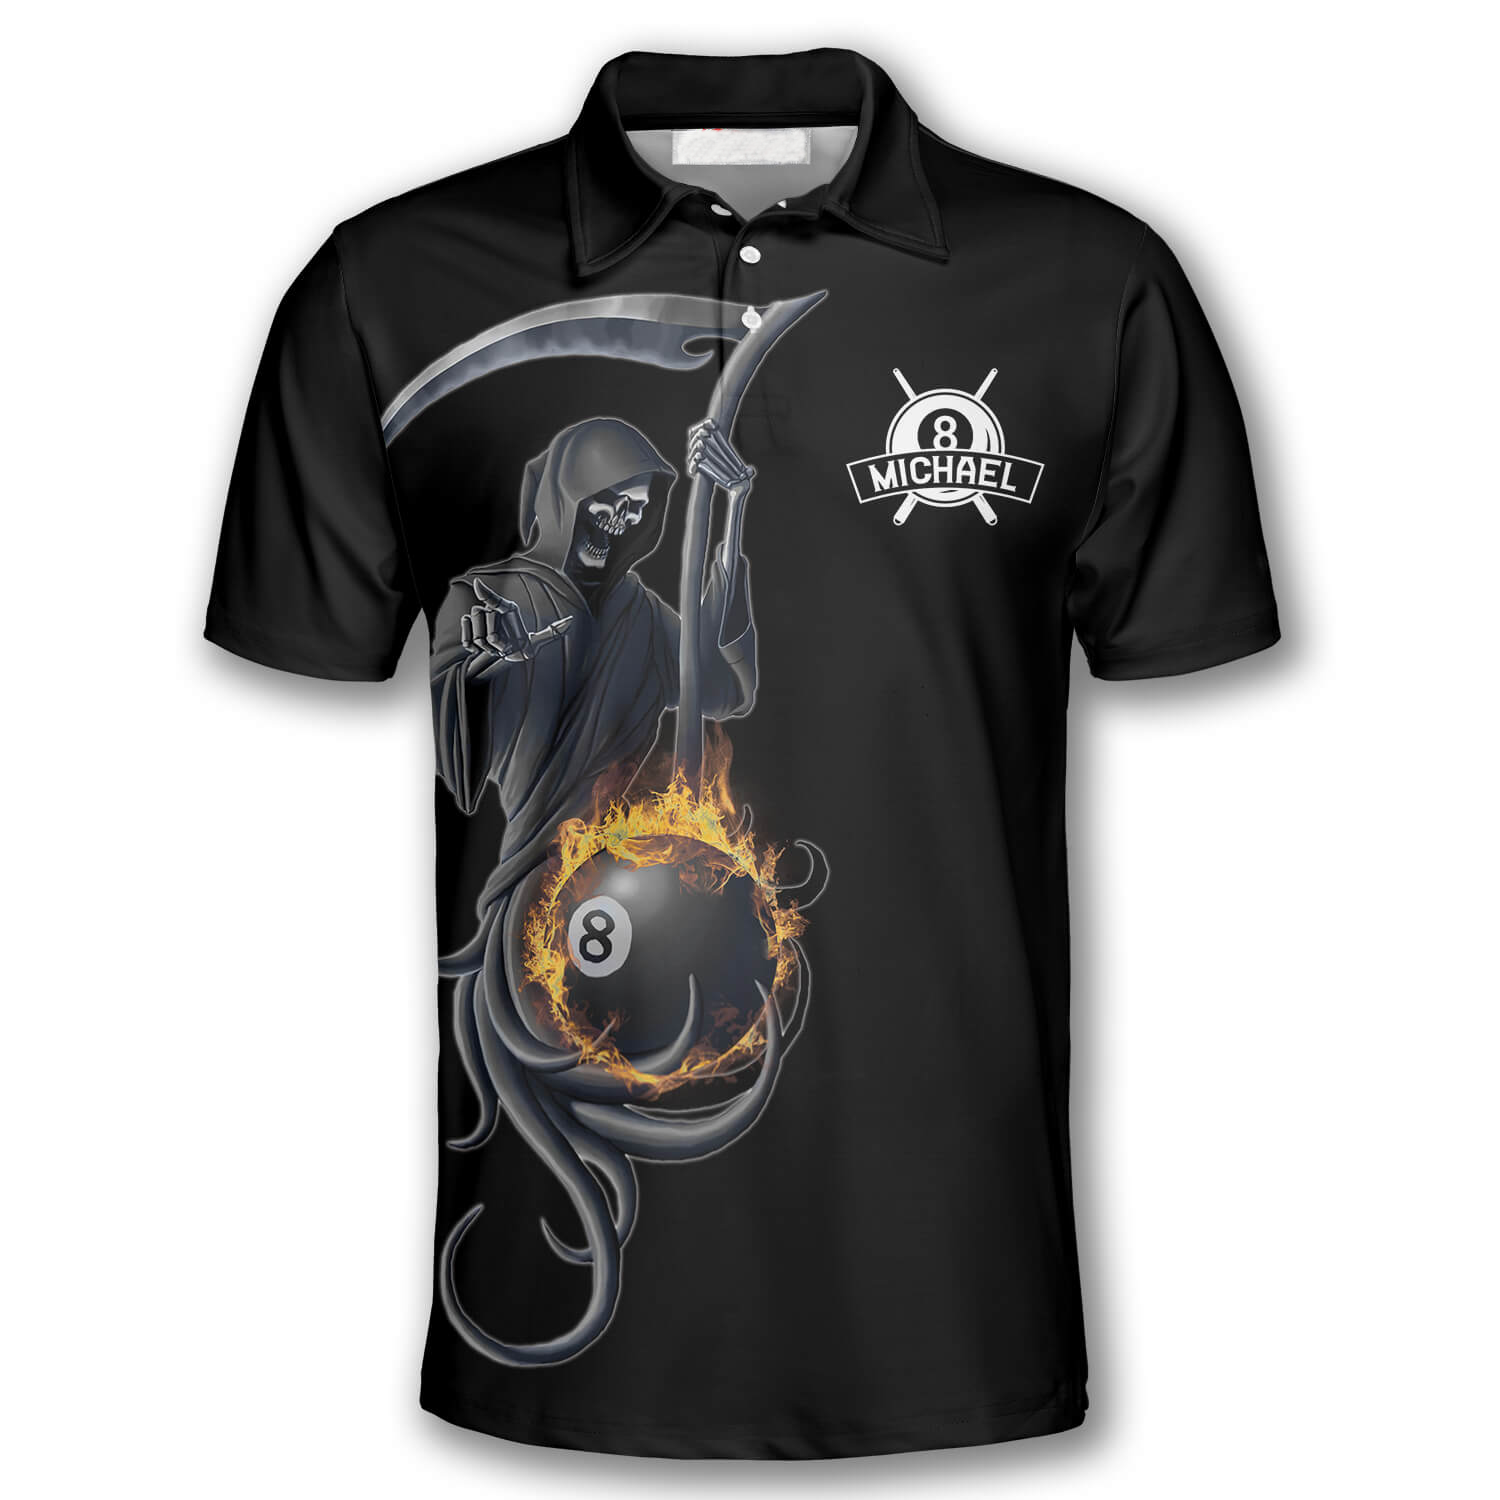 Personalized Grim Reaper Custom Billiard Polo Shirts for Men/ Skull Shirt/ Billiard Shirt